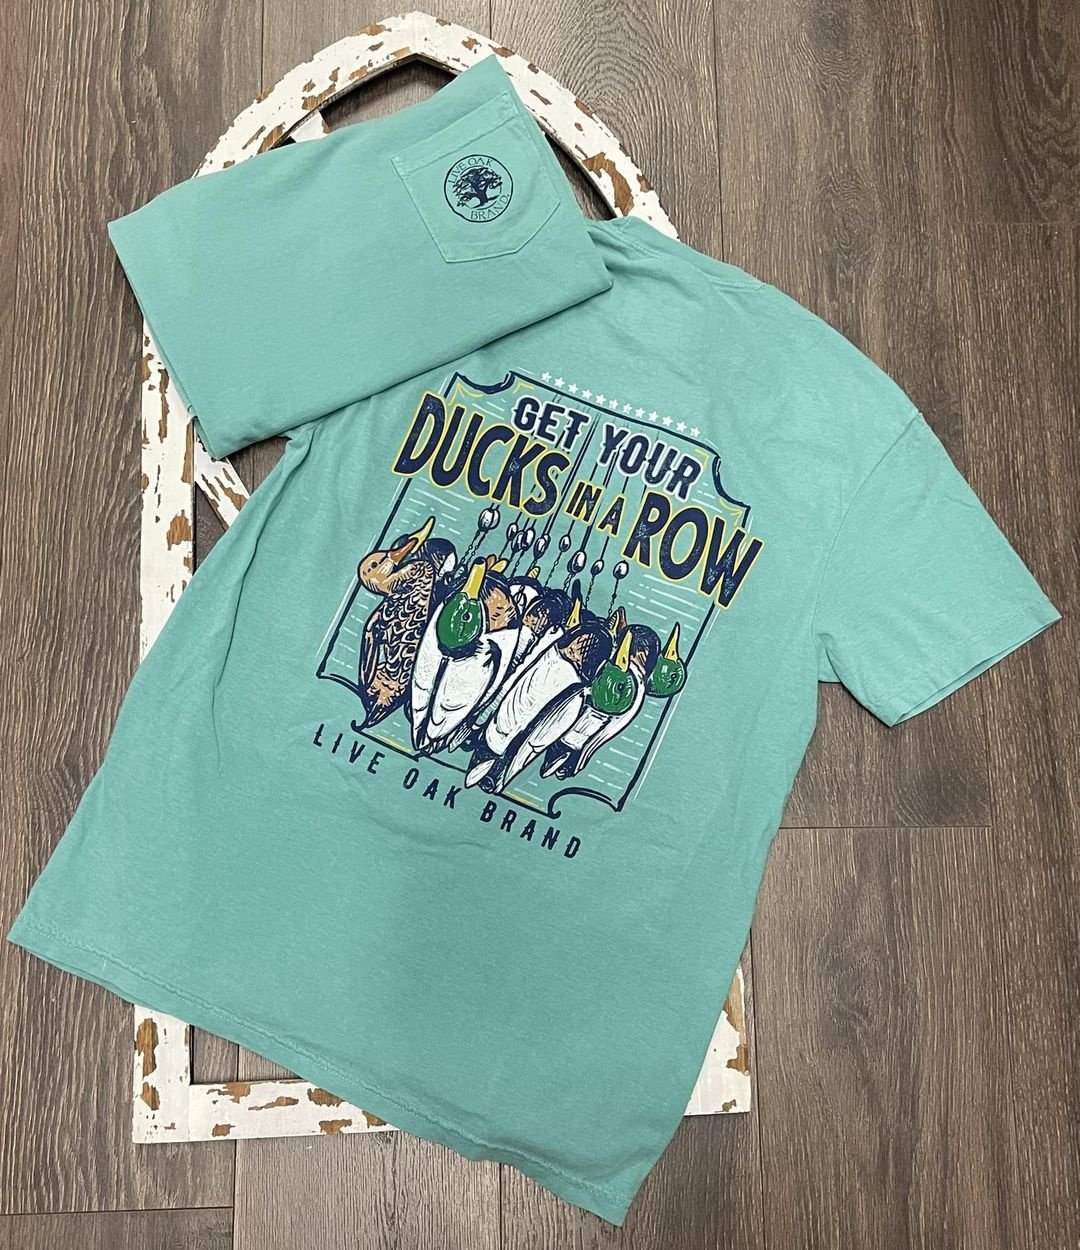 Live Oak Brand Ducks in a Row S/S TEE Shirt